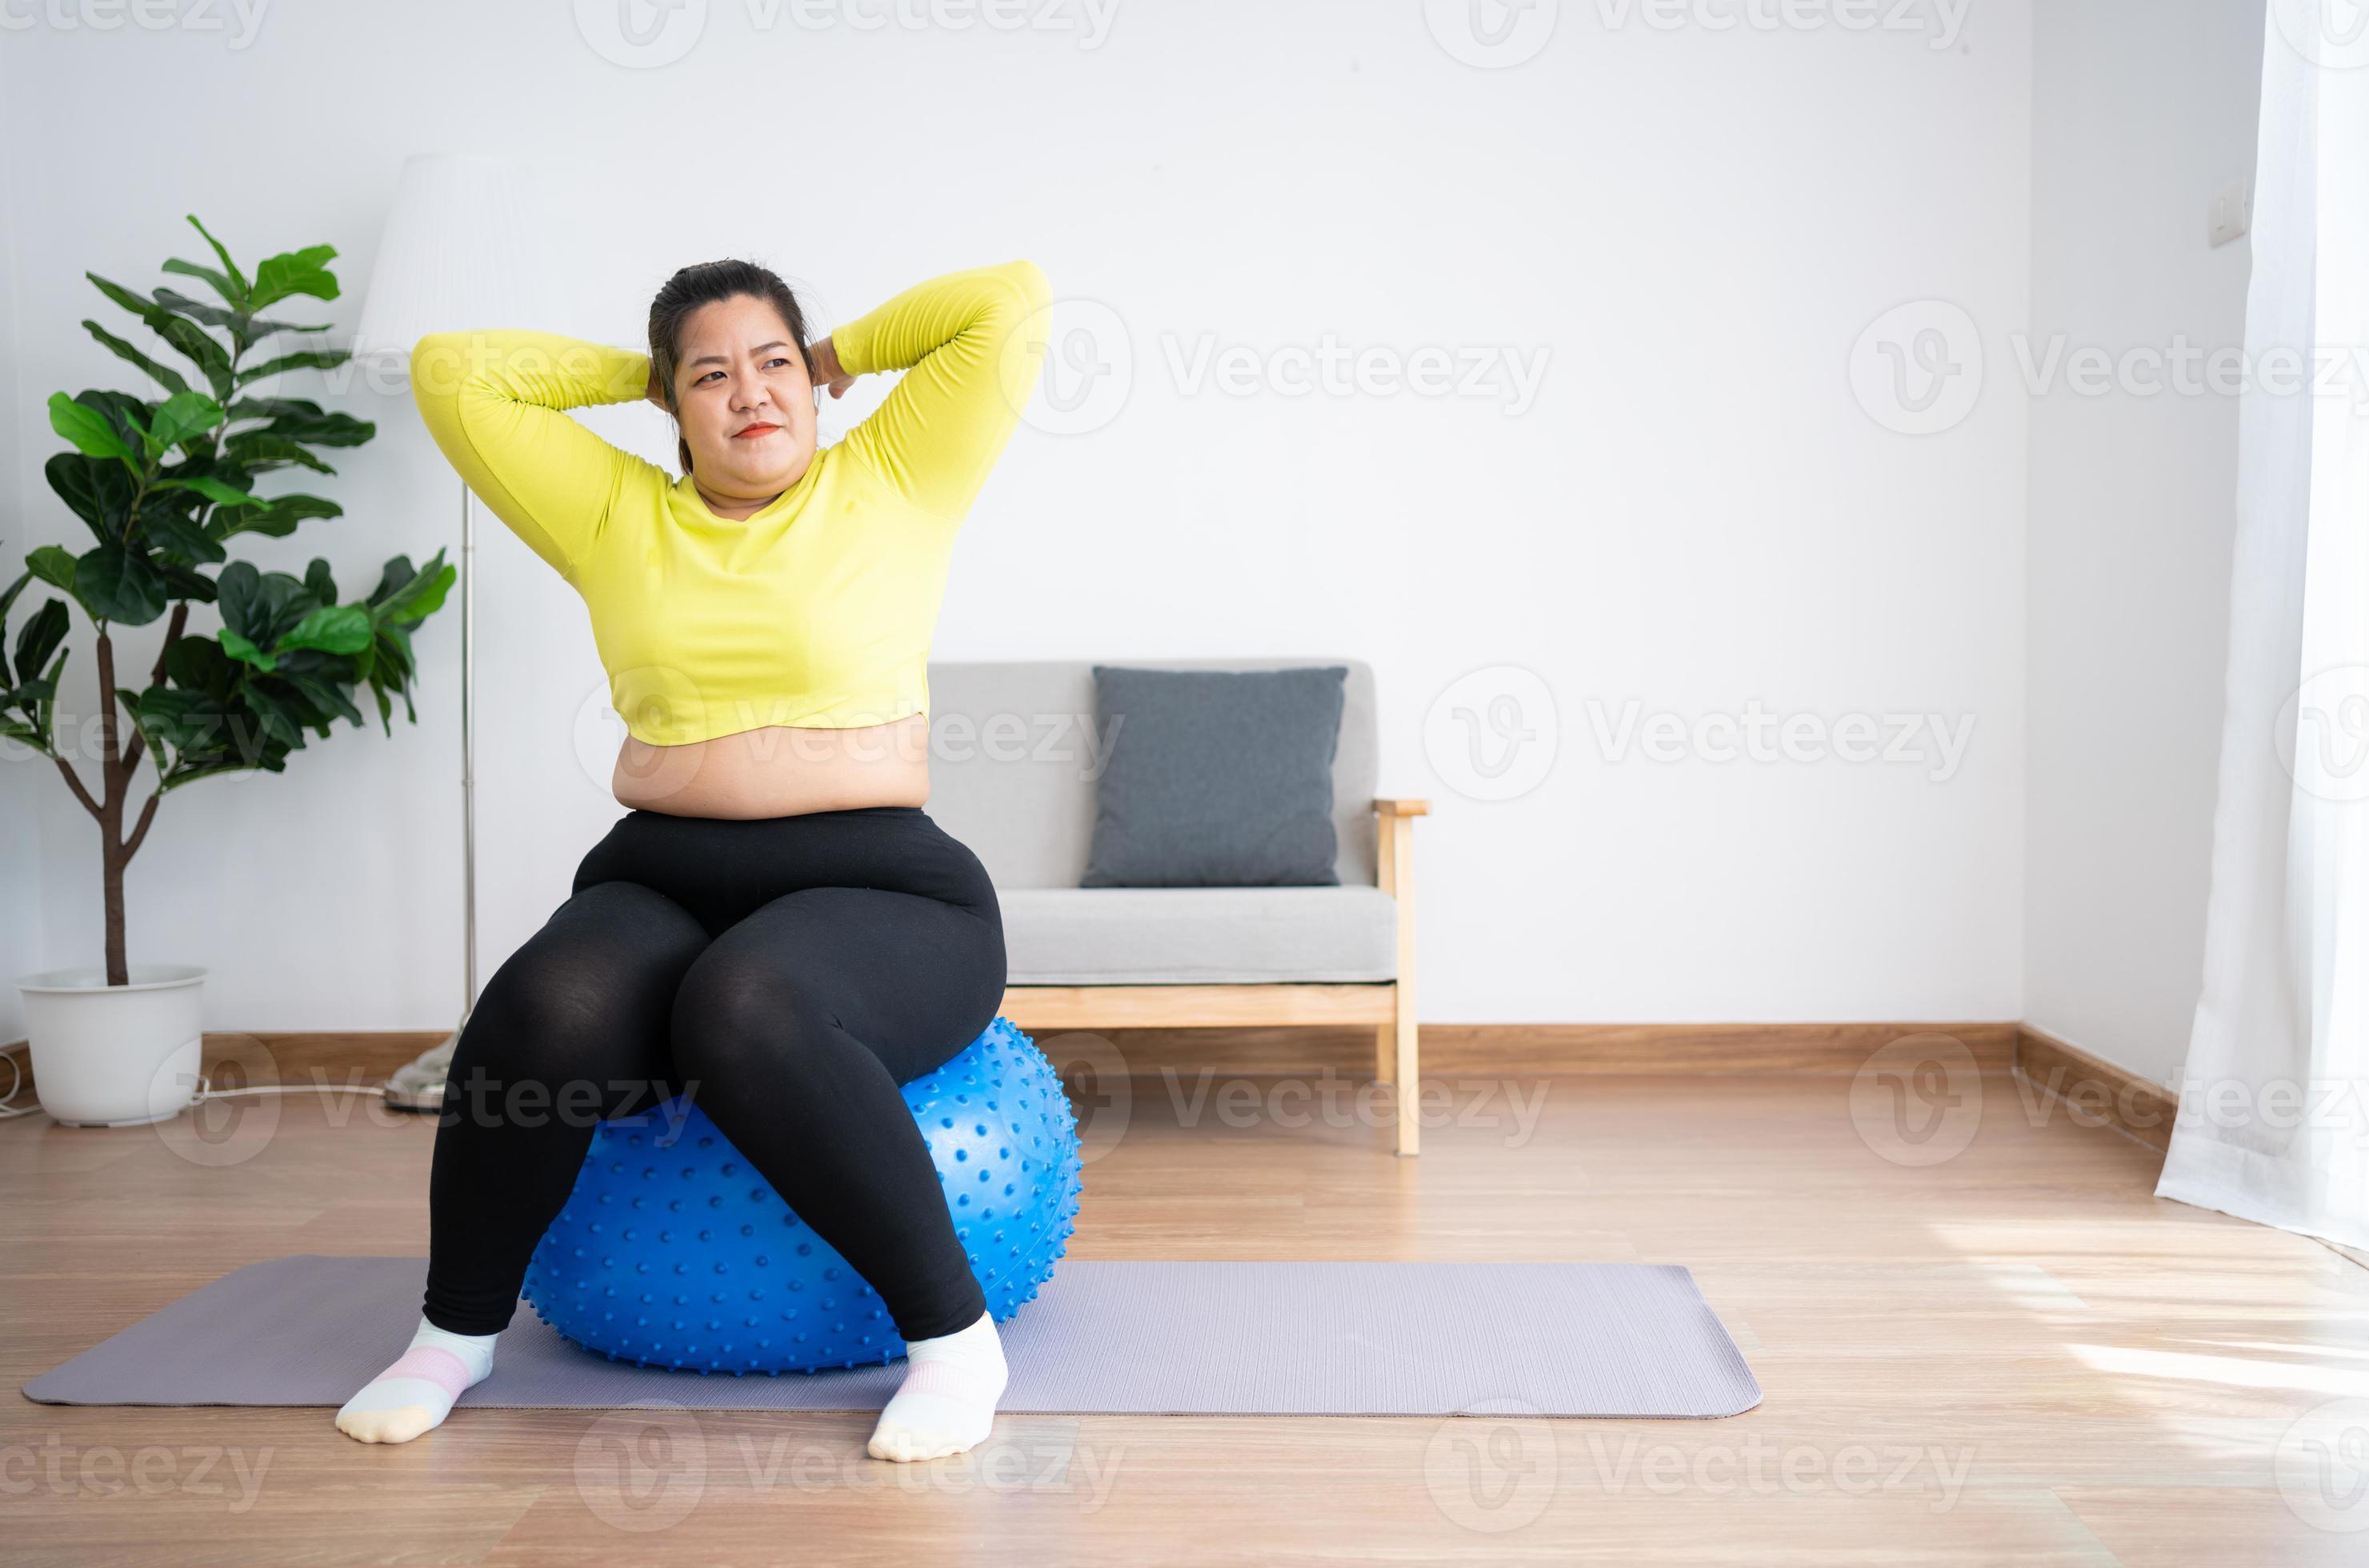 Plus-size Women's Health & Fitness 